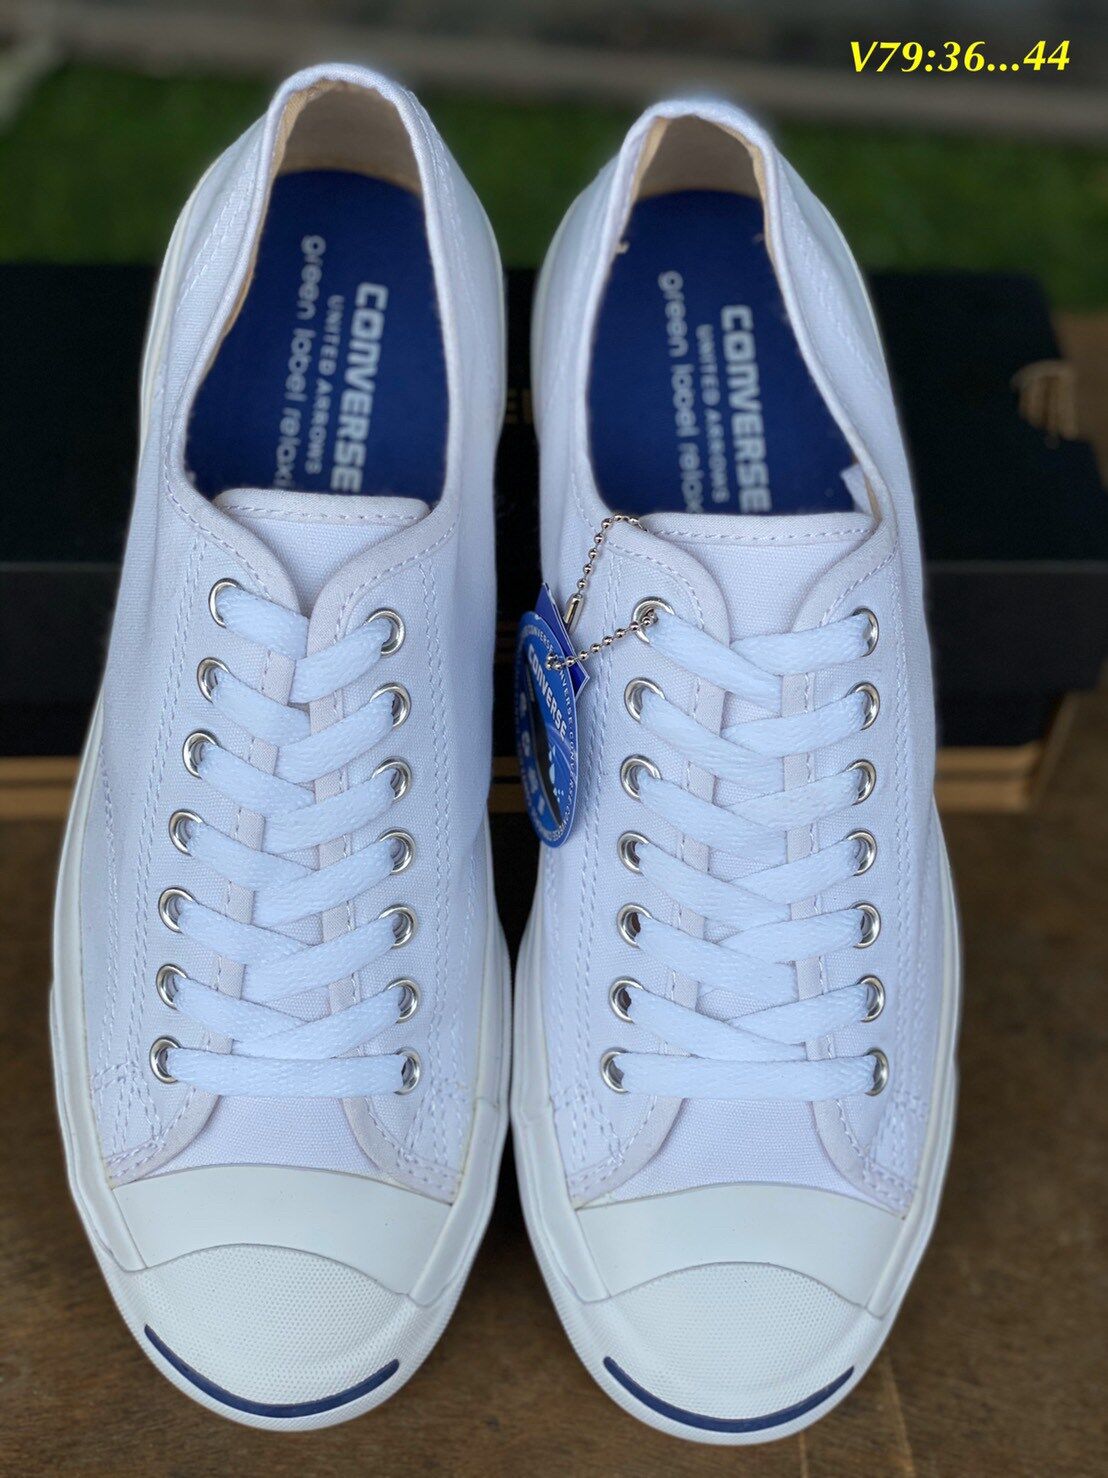 [MShose] รองเท้าConverse Jack Purcell Tumbled Leather OX รองเท้าผ้าใบ รองเท้าลำลอง รองเท้าแฟชั่น สินค้าพร้อมกล่อง